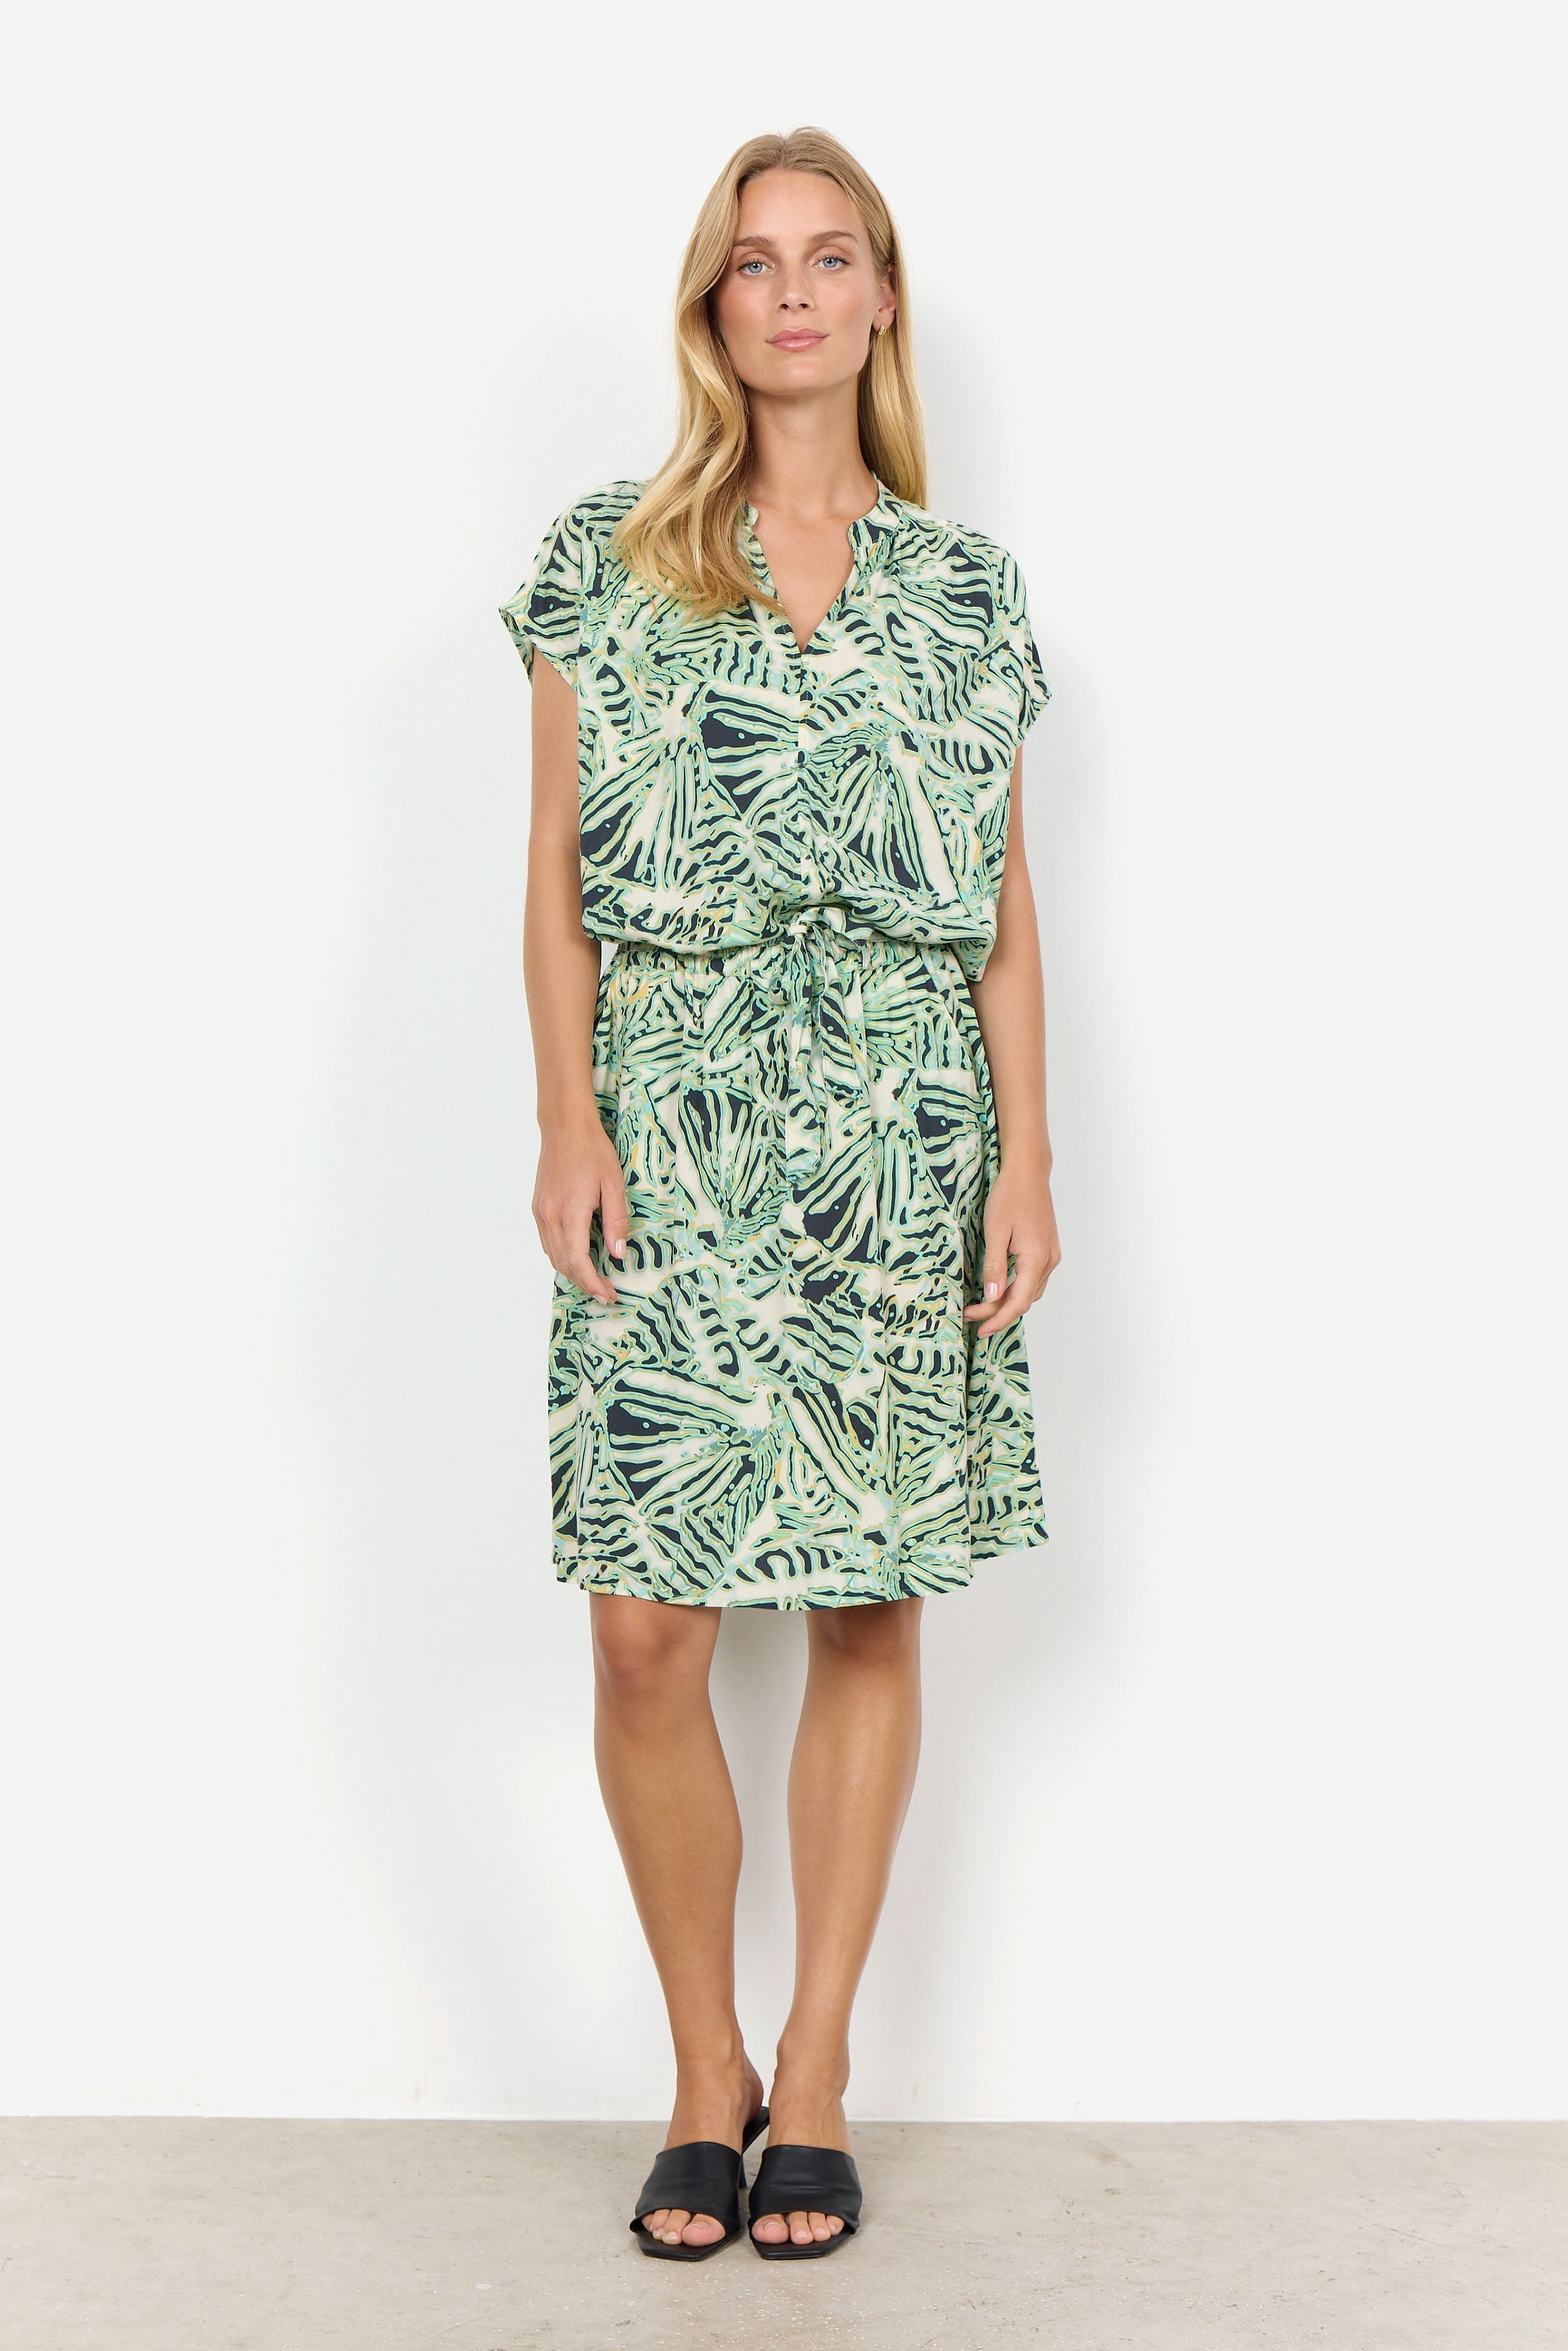 Soya Concept (40627) Women's Short Sleeve Aqua Foliage Print Blouse with split V-neck